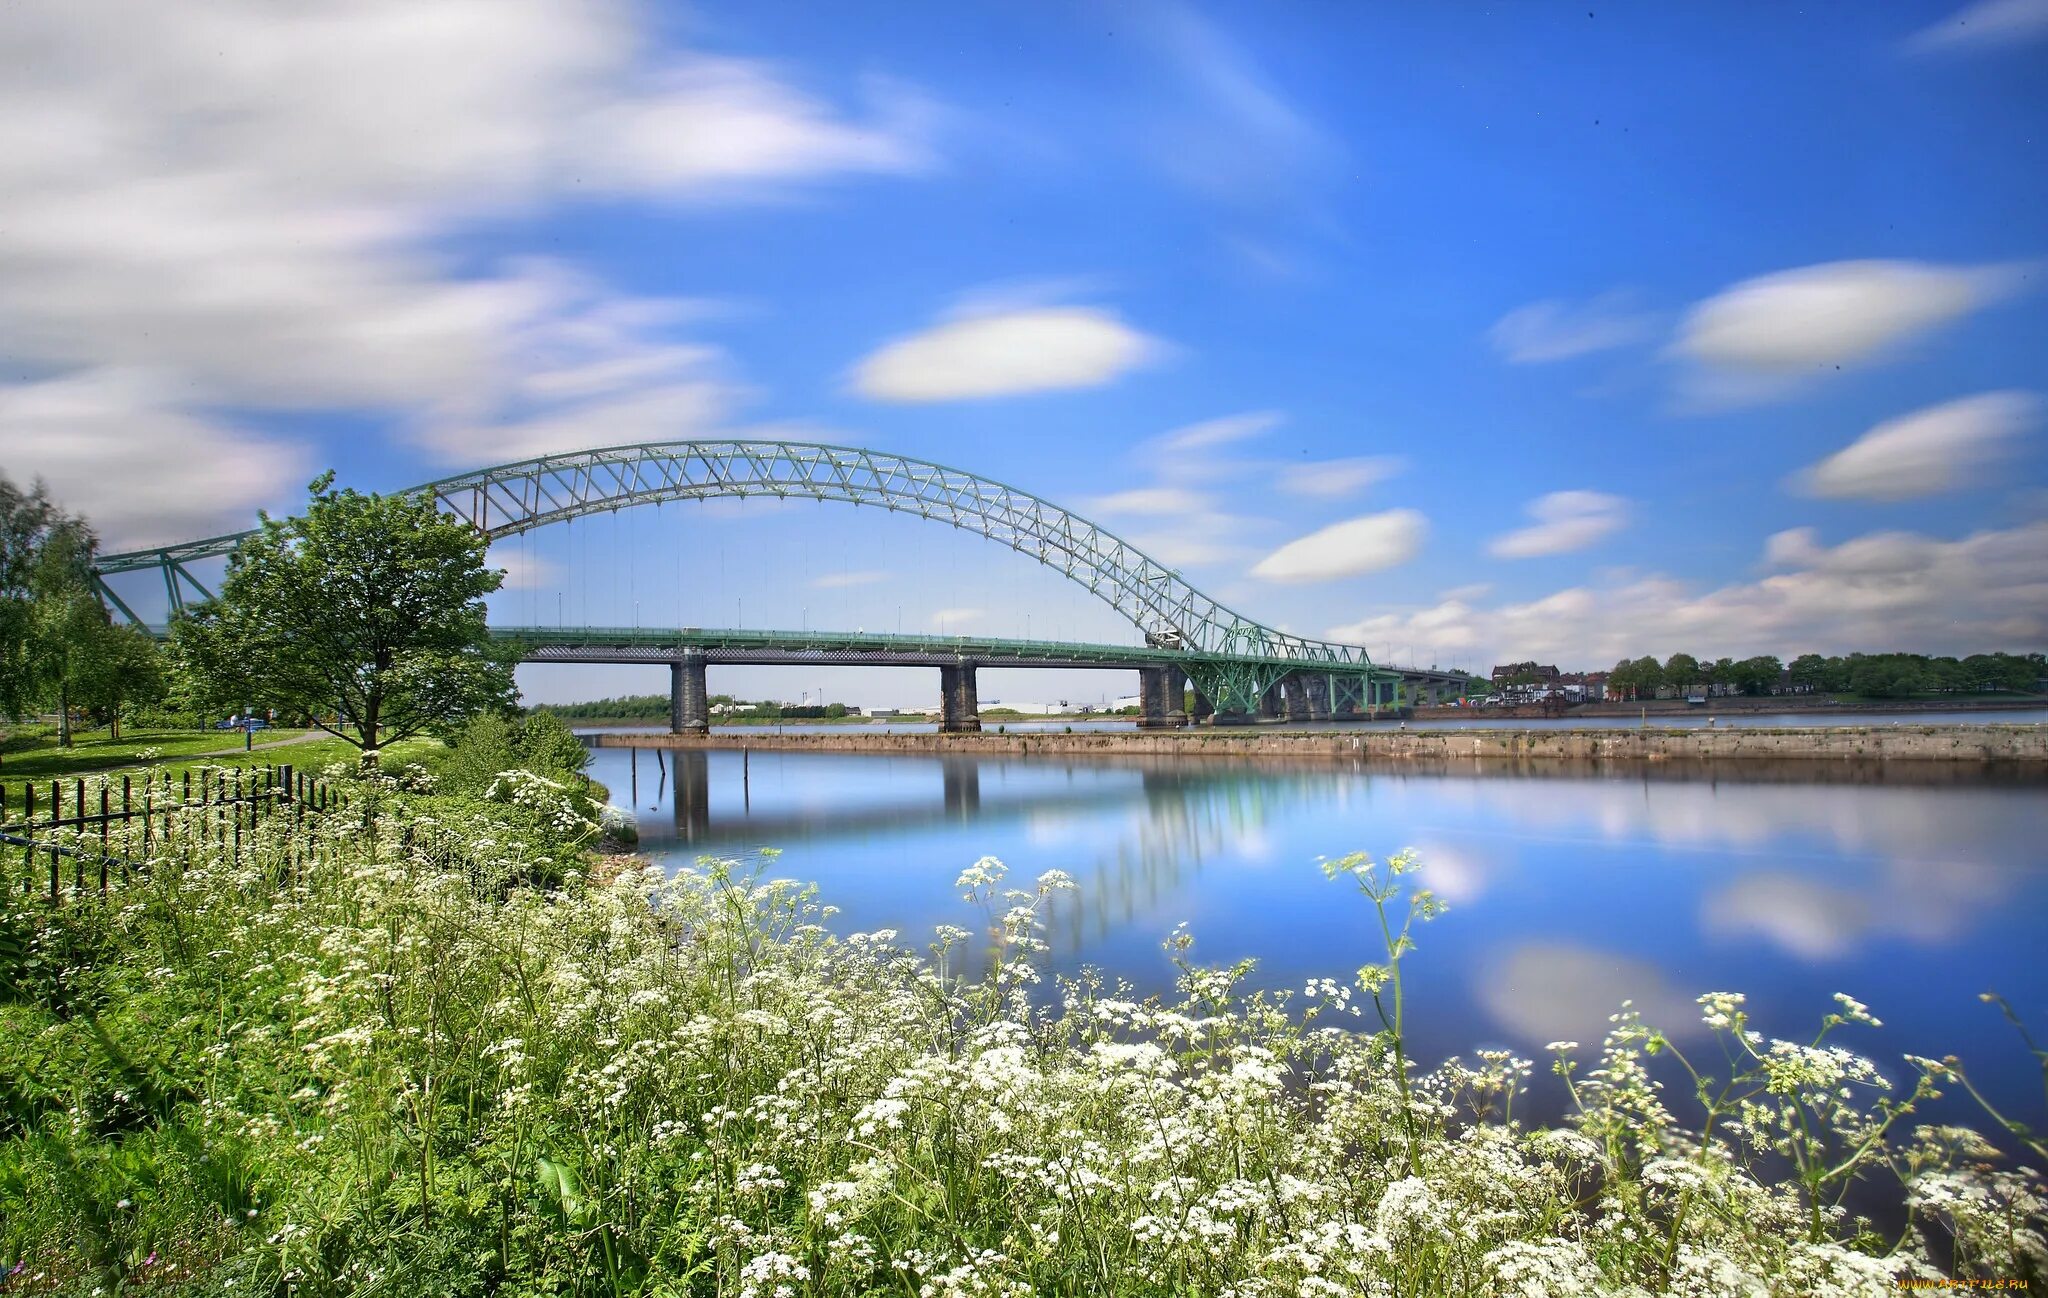 Протекала речка через речку мост. Ранкорн мост. Мост на реке. Мост через цветы. Мост с цветами.